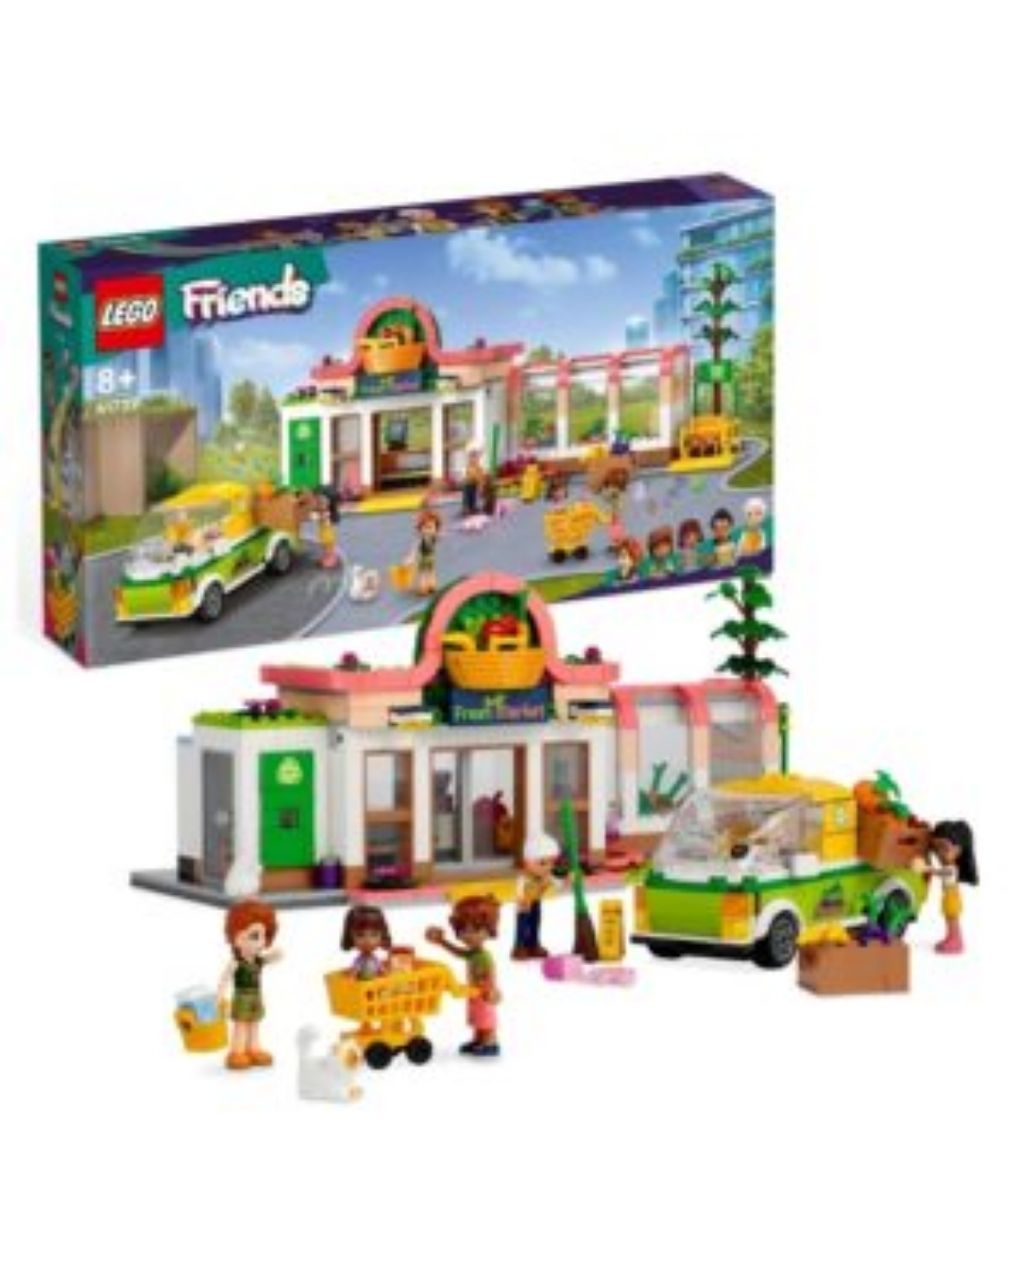 Lego friends βιολογικό παντοπωλείο 41729 - Lego